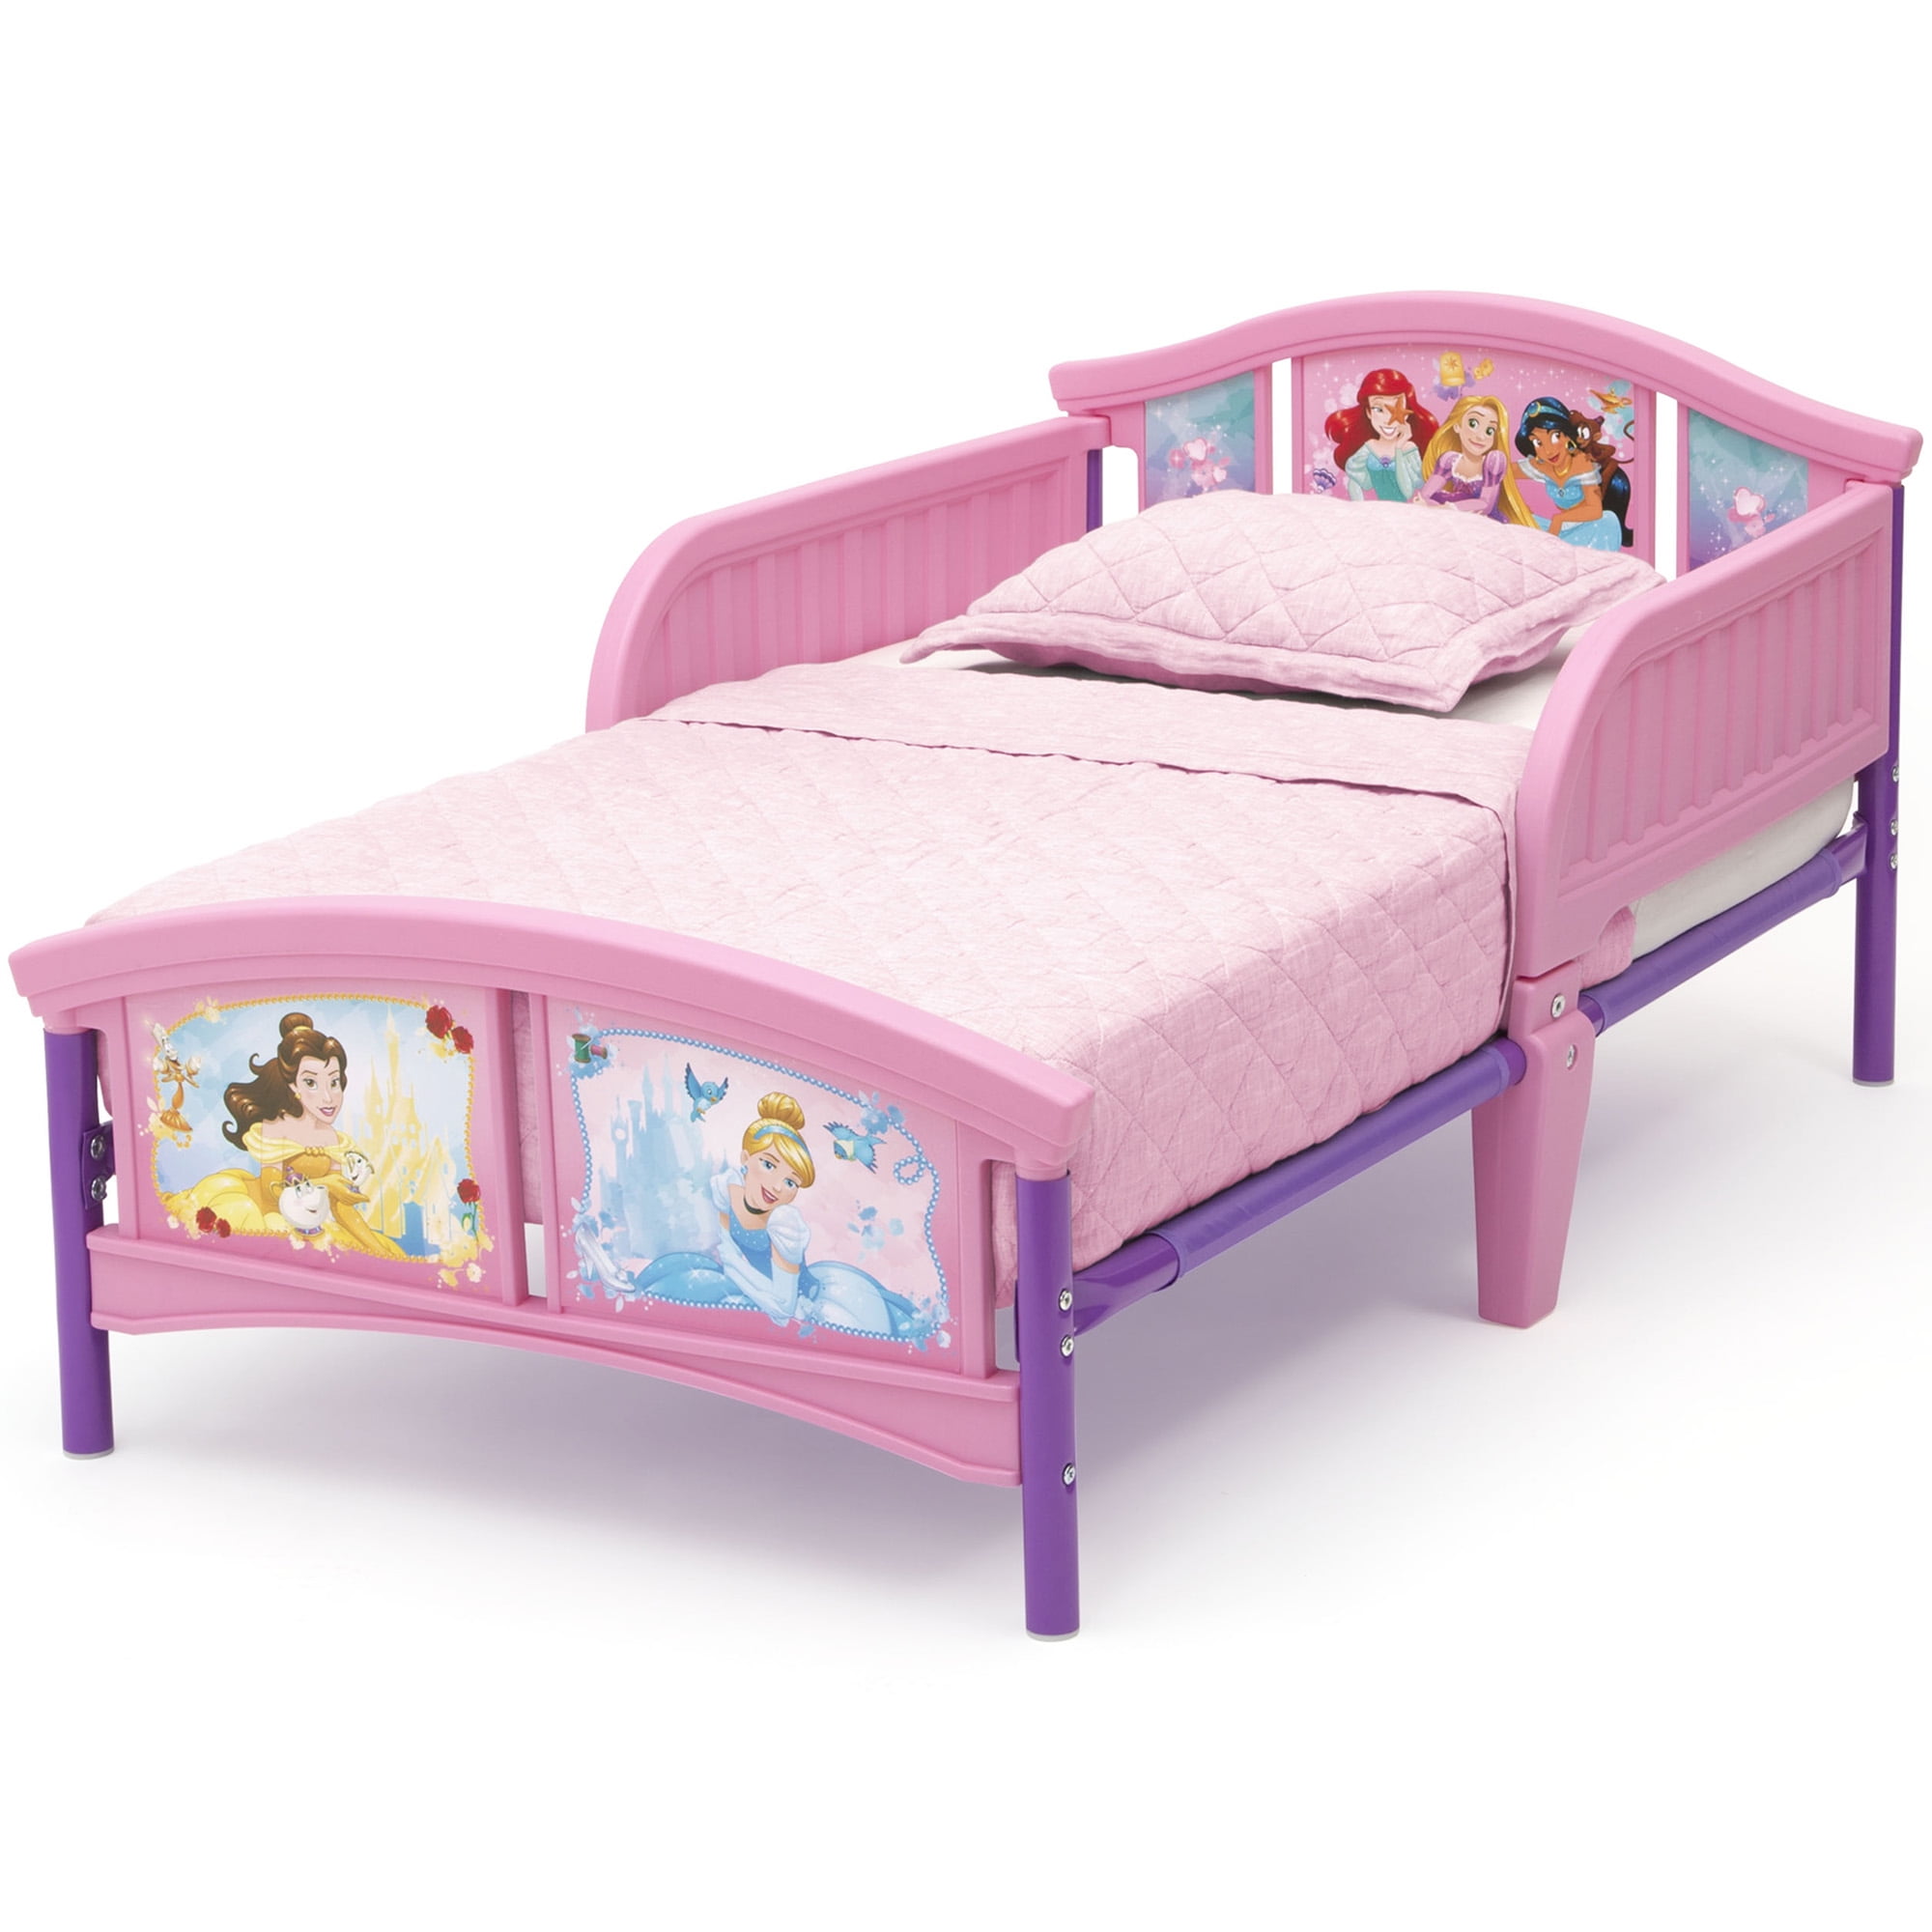 Disney Princess Plastic Toddler Bed By Delta Children Forever